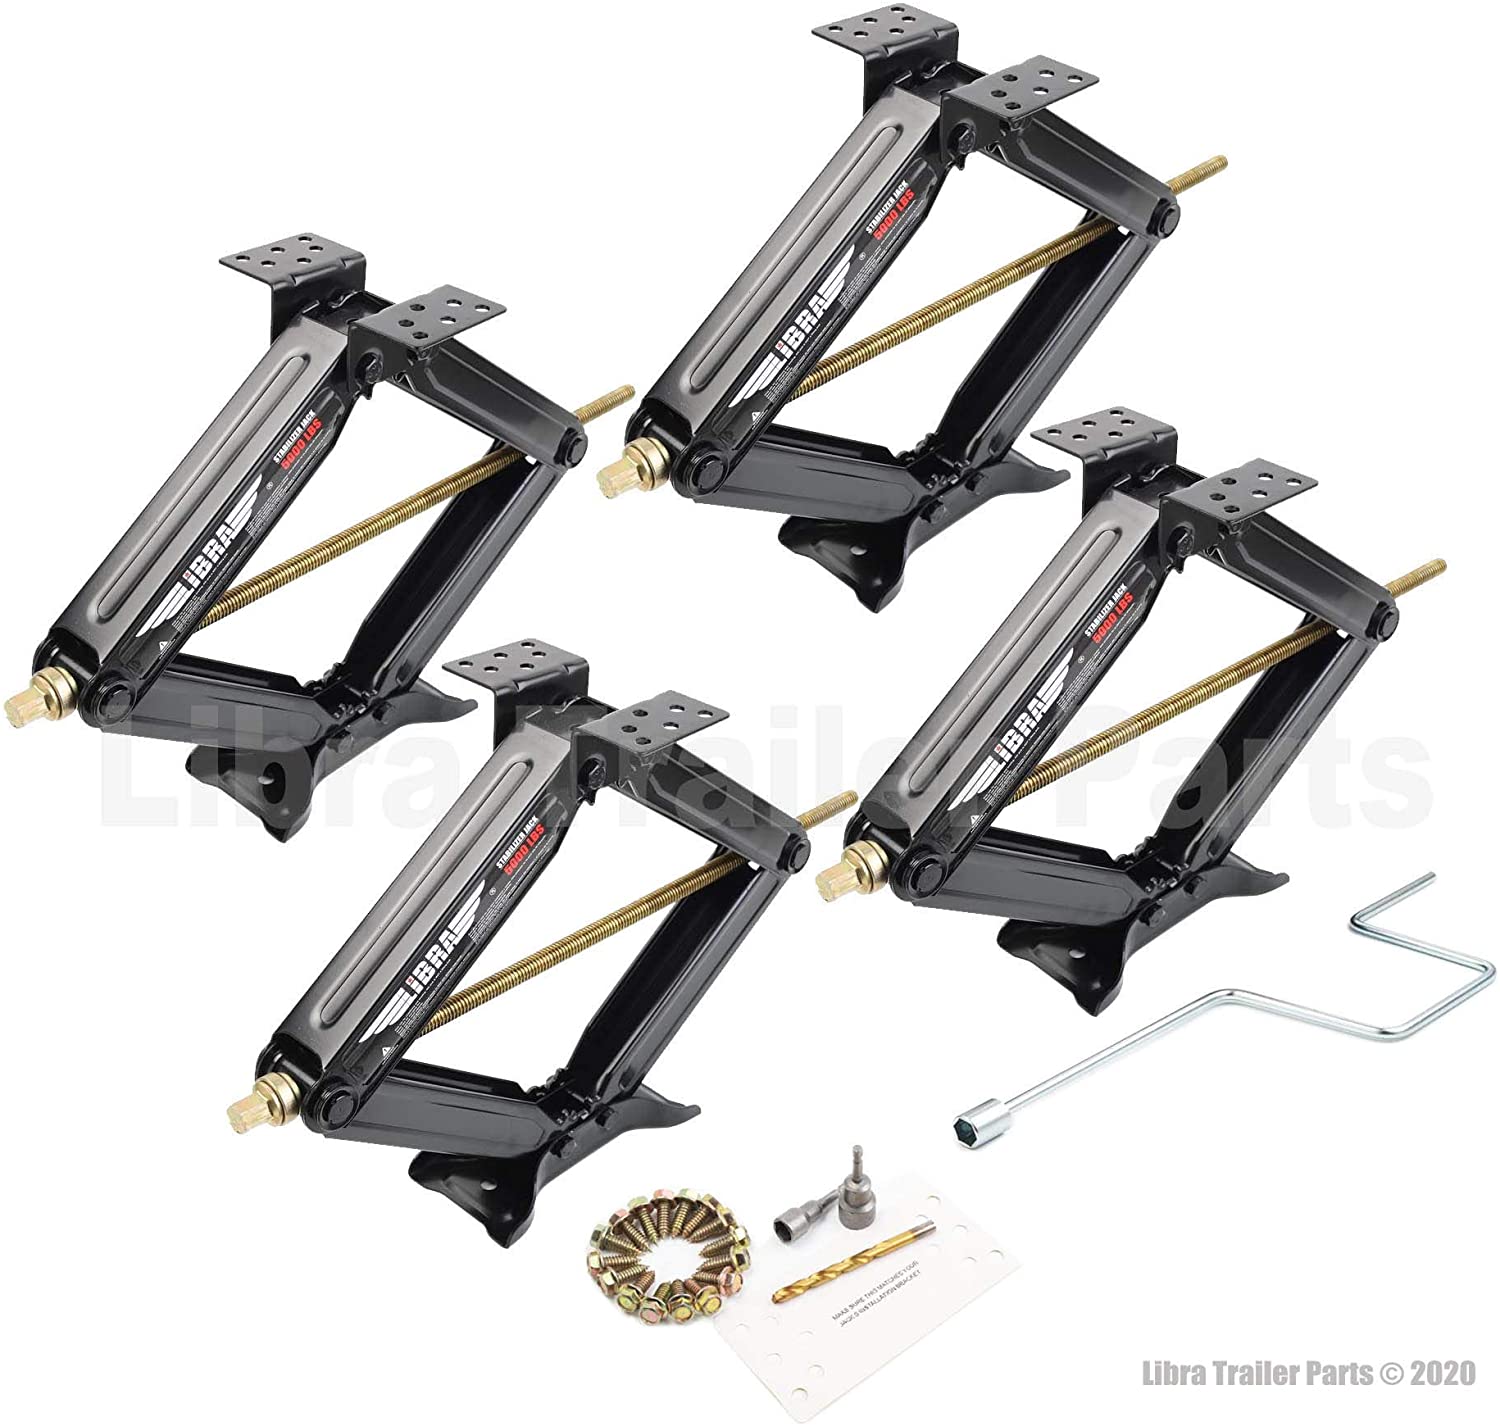 LIBRA Set of 4 5000lbs RV Trailer Stabilizer Leveling Scissor Jacks w/Dual Power Drill sockets & mounting Hardware Set